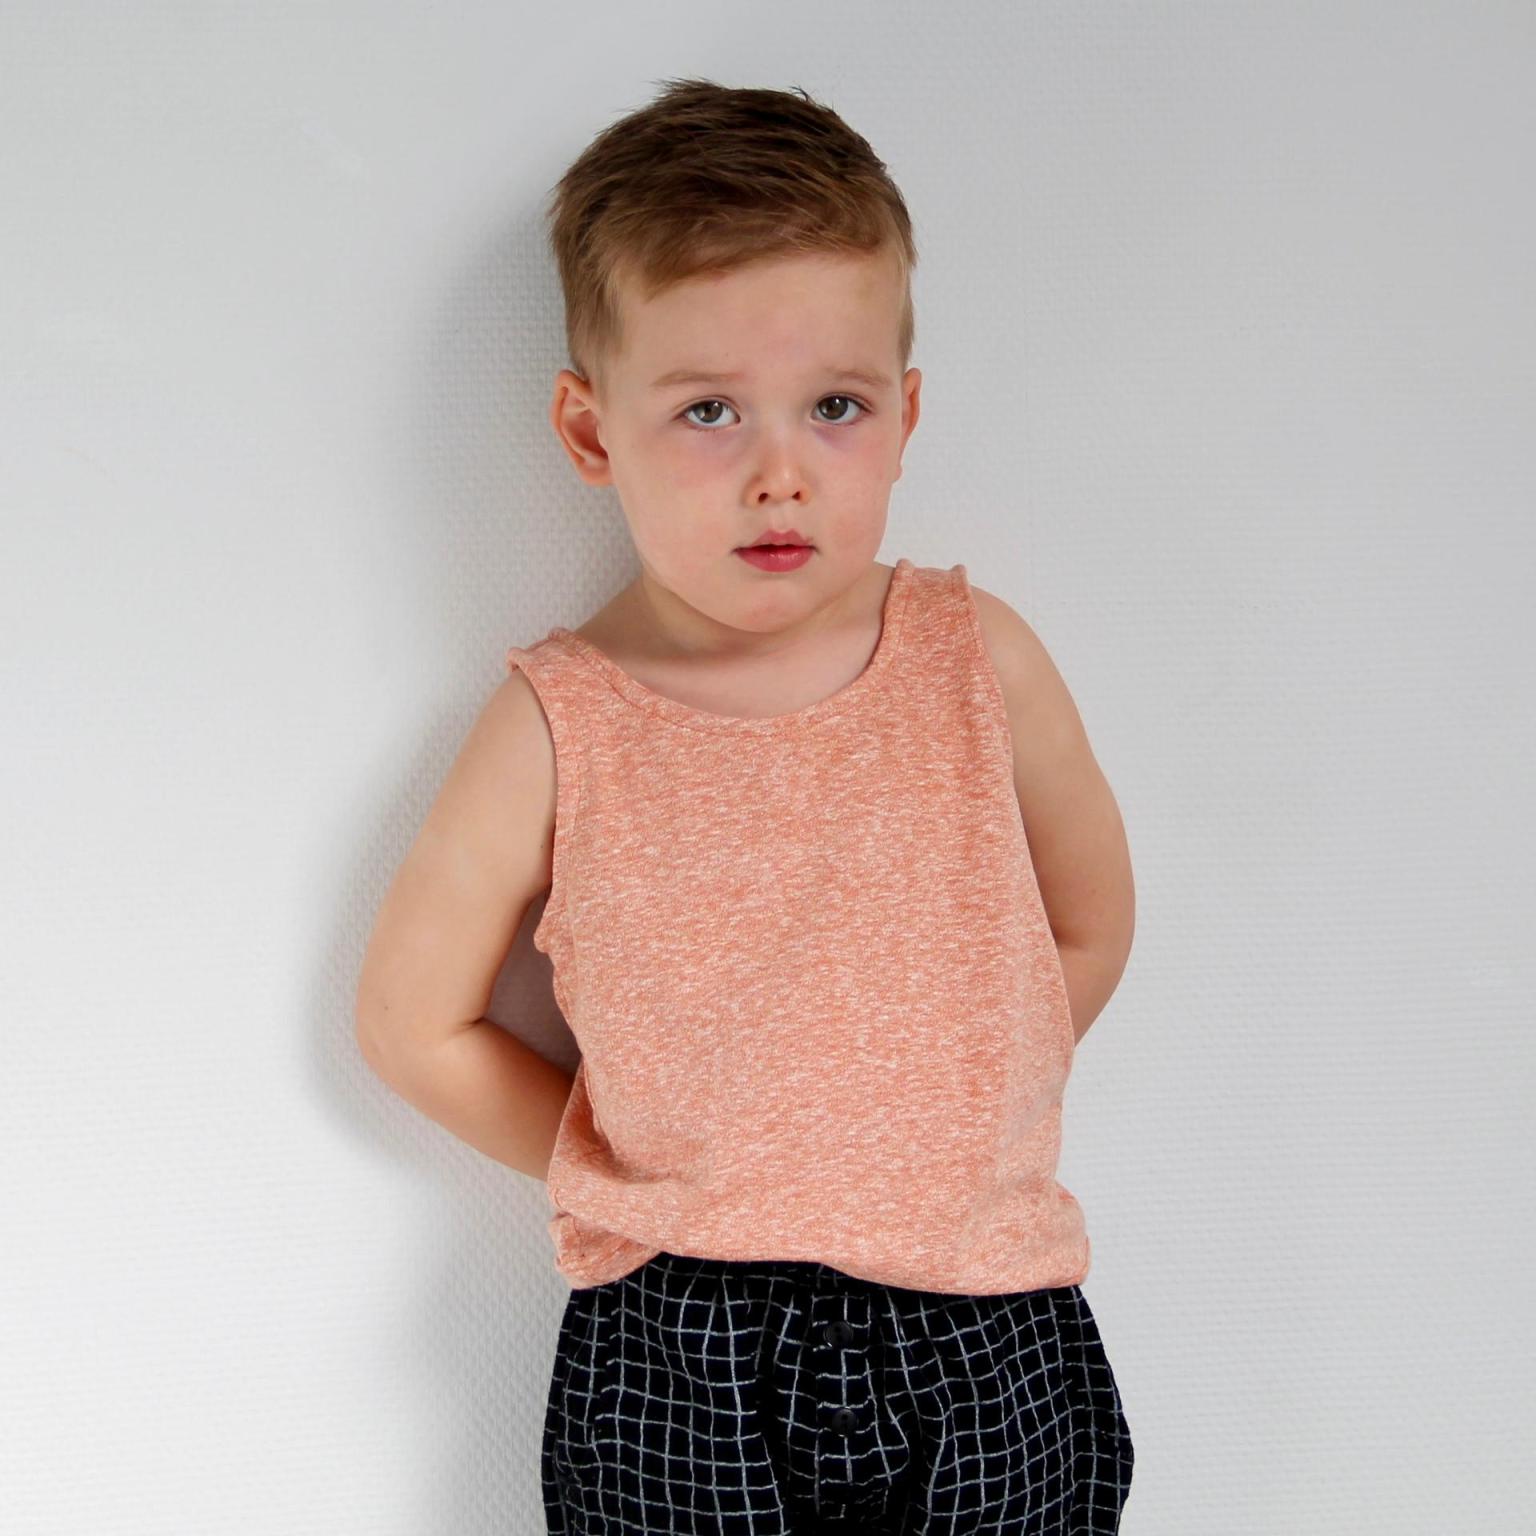 WISJ Designs Child/Teen Jente Dress and Top